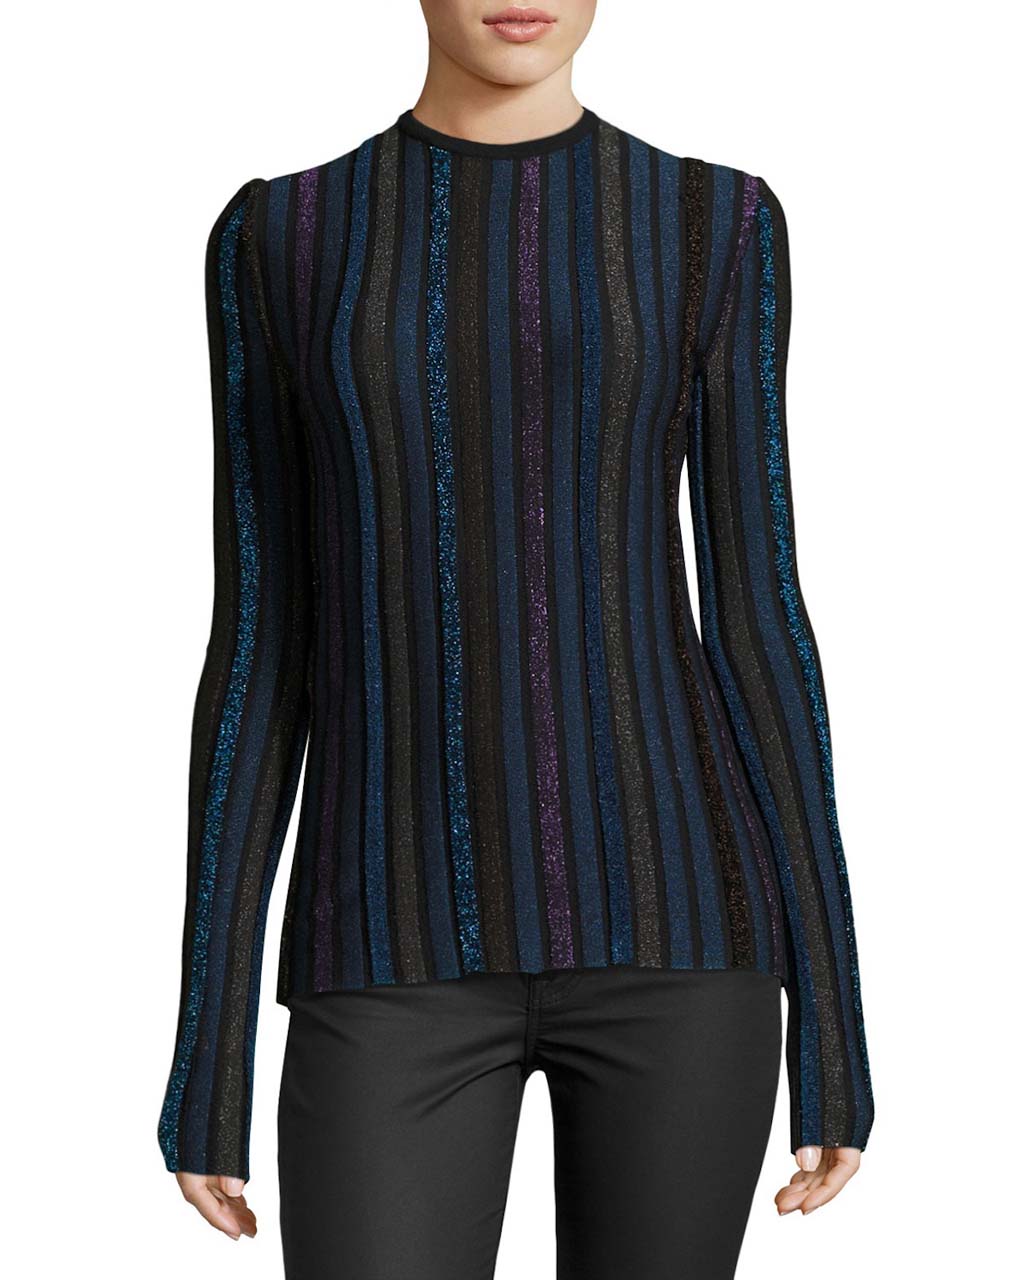 Nina Ricci Metallic-Striped Knit Sweater, Multi